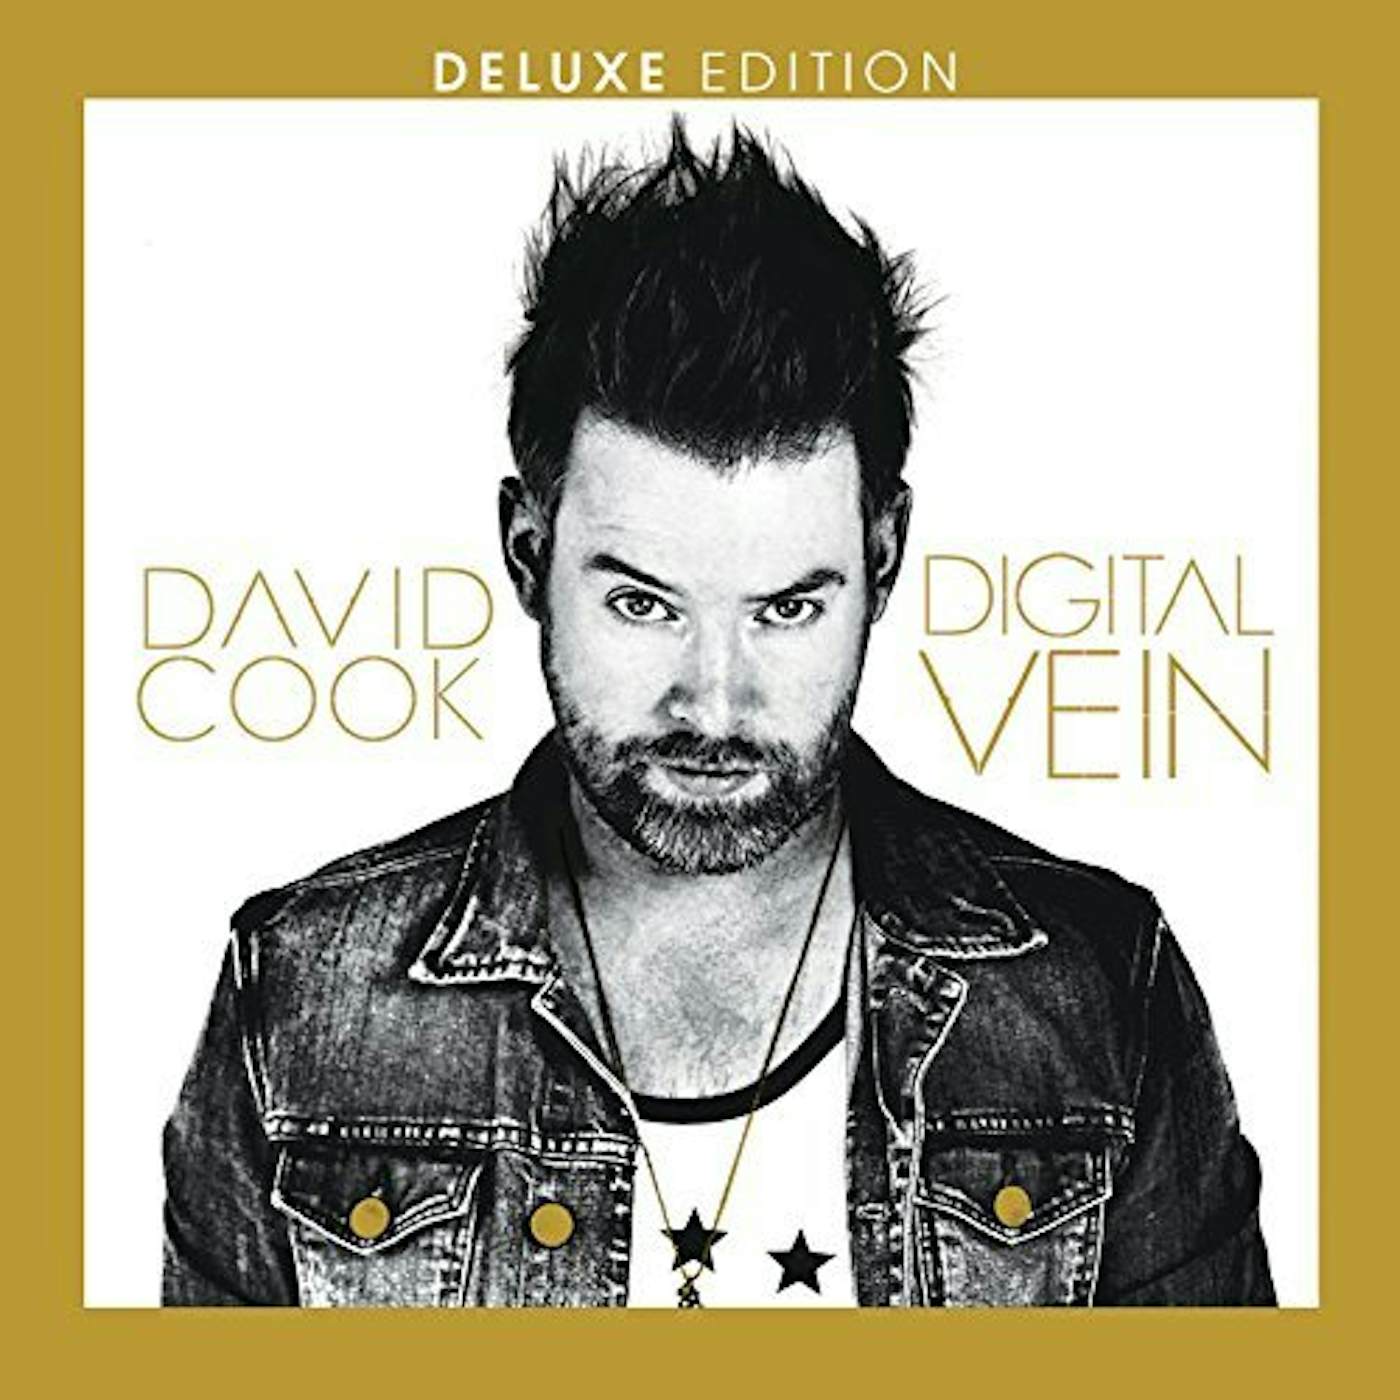 David Cook DIGITAL VEIN CD